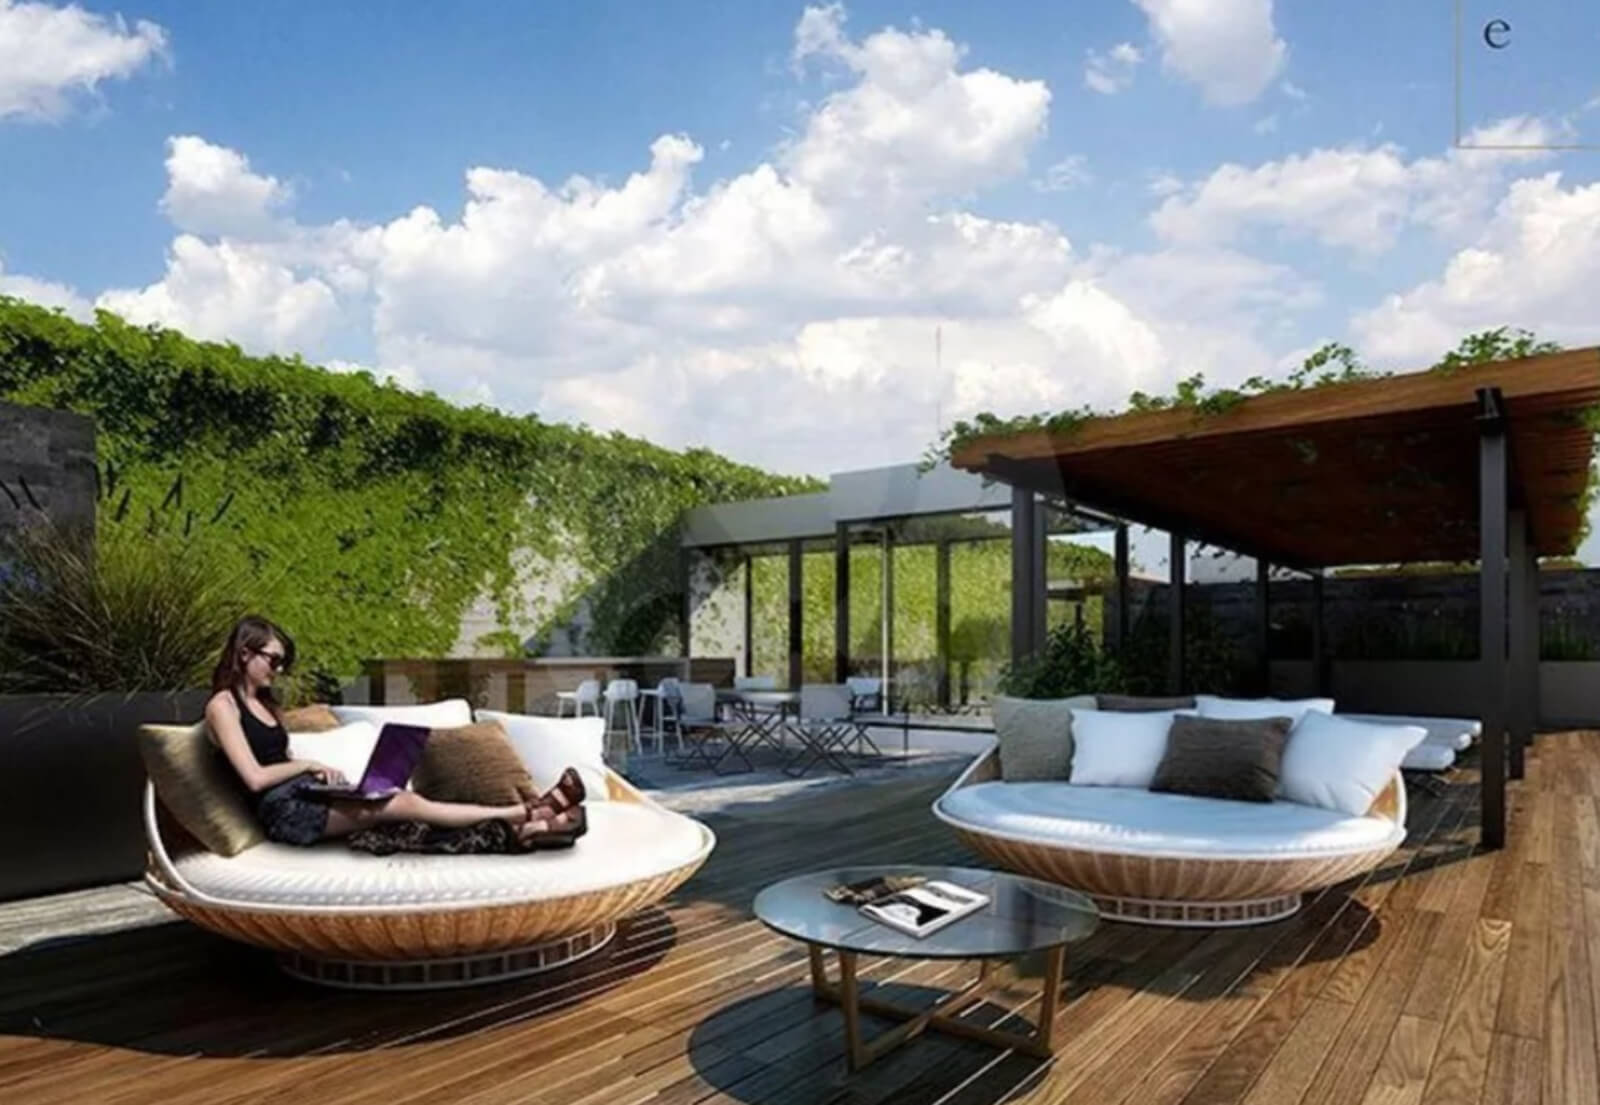 Condominium with private garden, pool, barbecue, gym, for sale Polanco